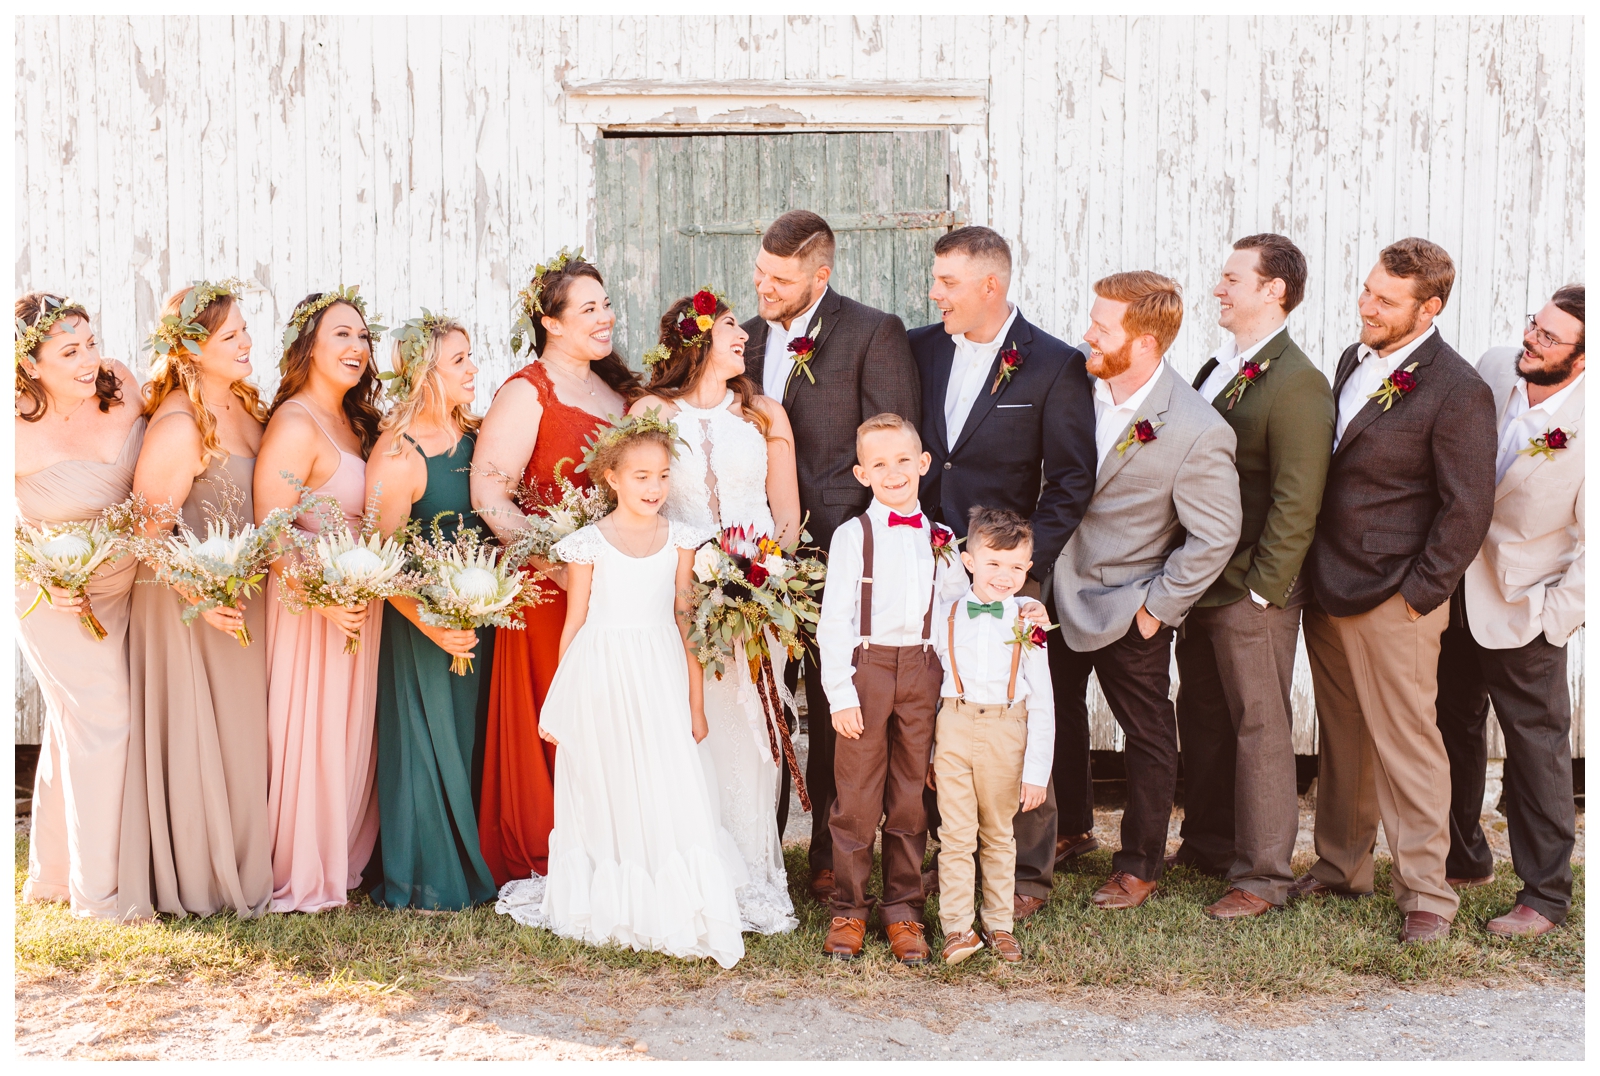 Kelley & Andrew's Intimate Backyard Farm Wedding - Brooke Michelle ...